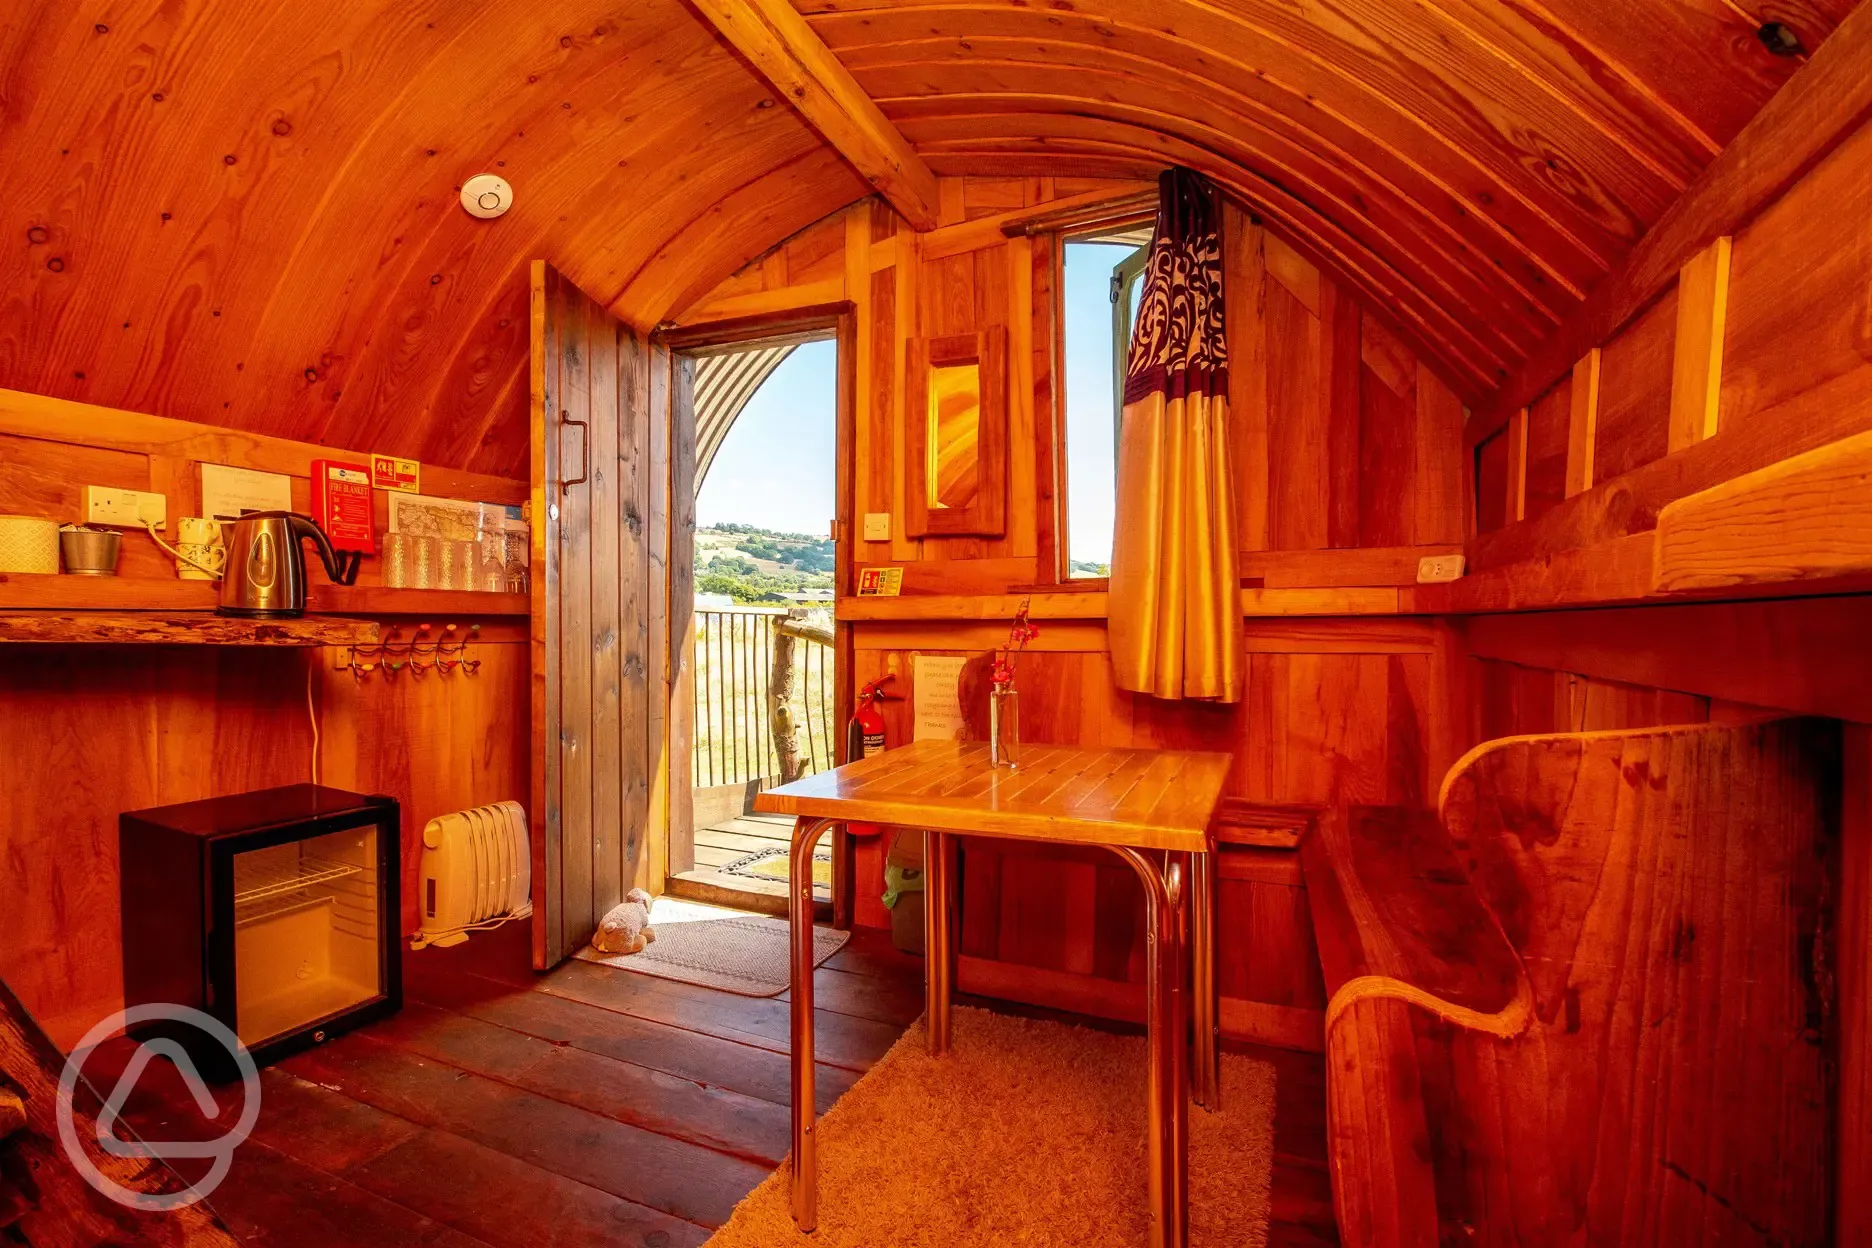 Peter Rabbit shepherd's hut pod interior